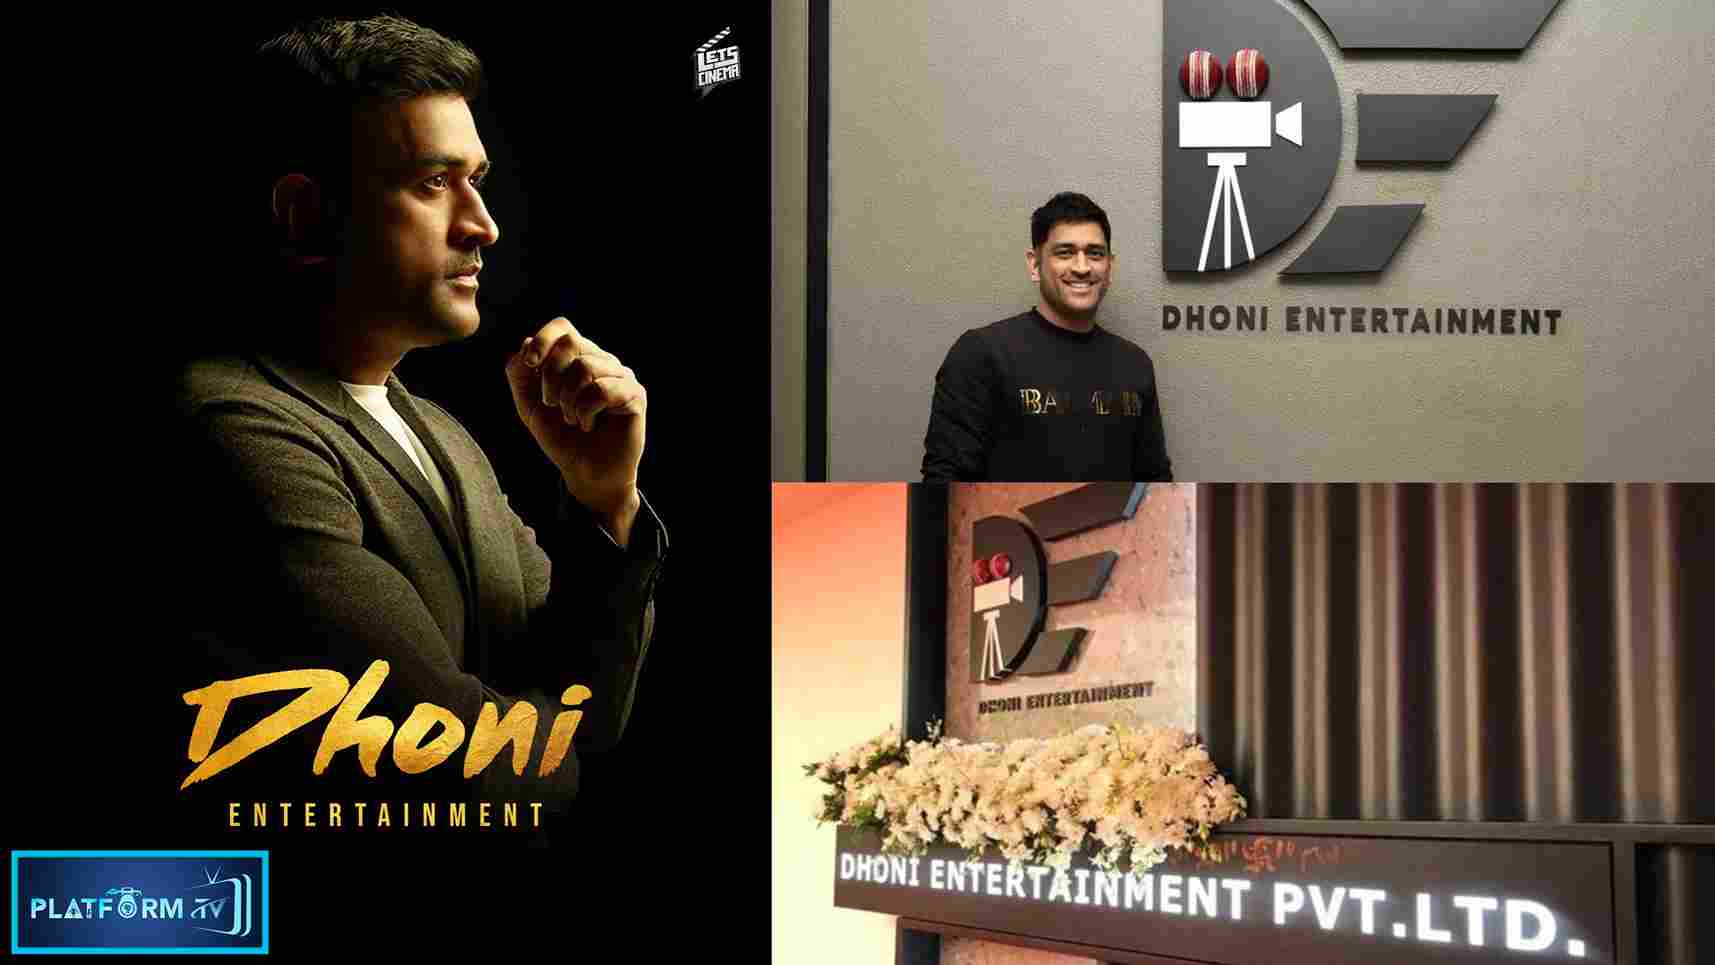 Dhoni Entertainment Company - Platform Tamil